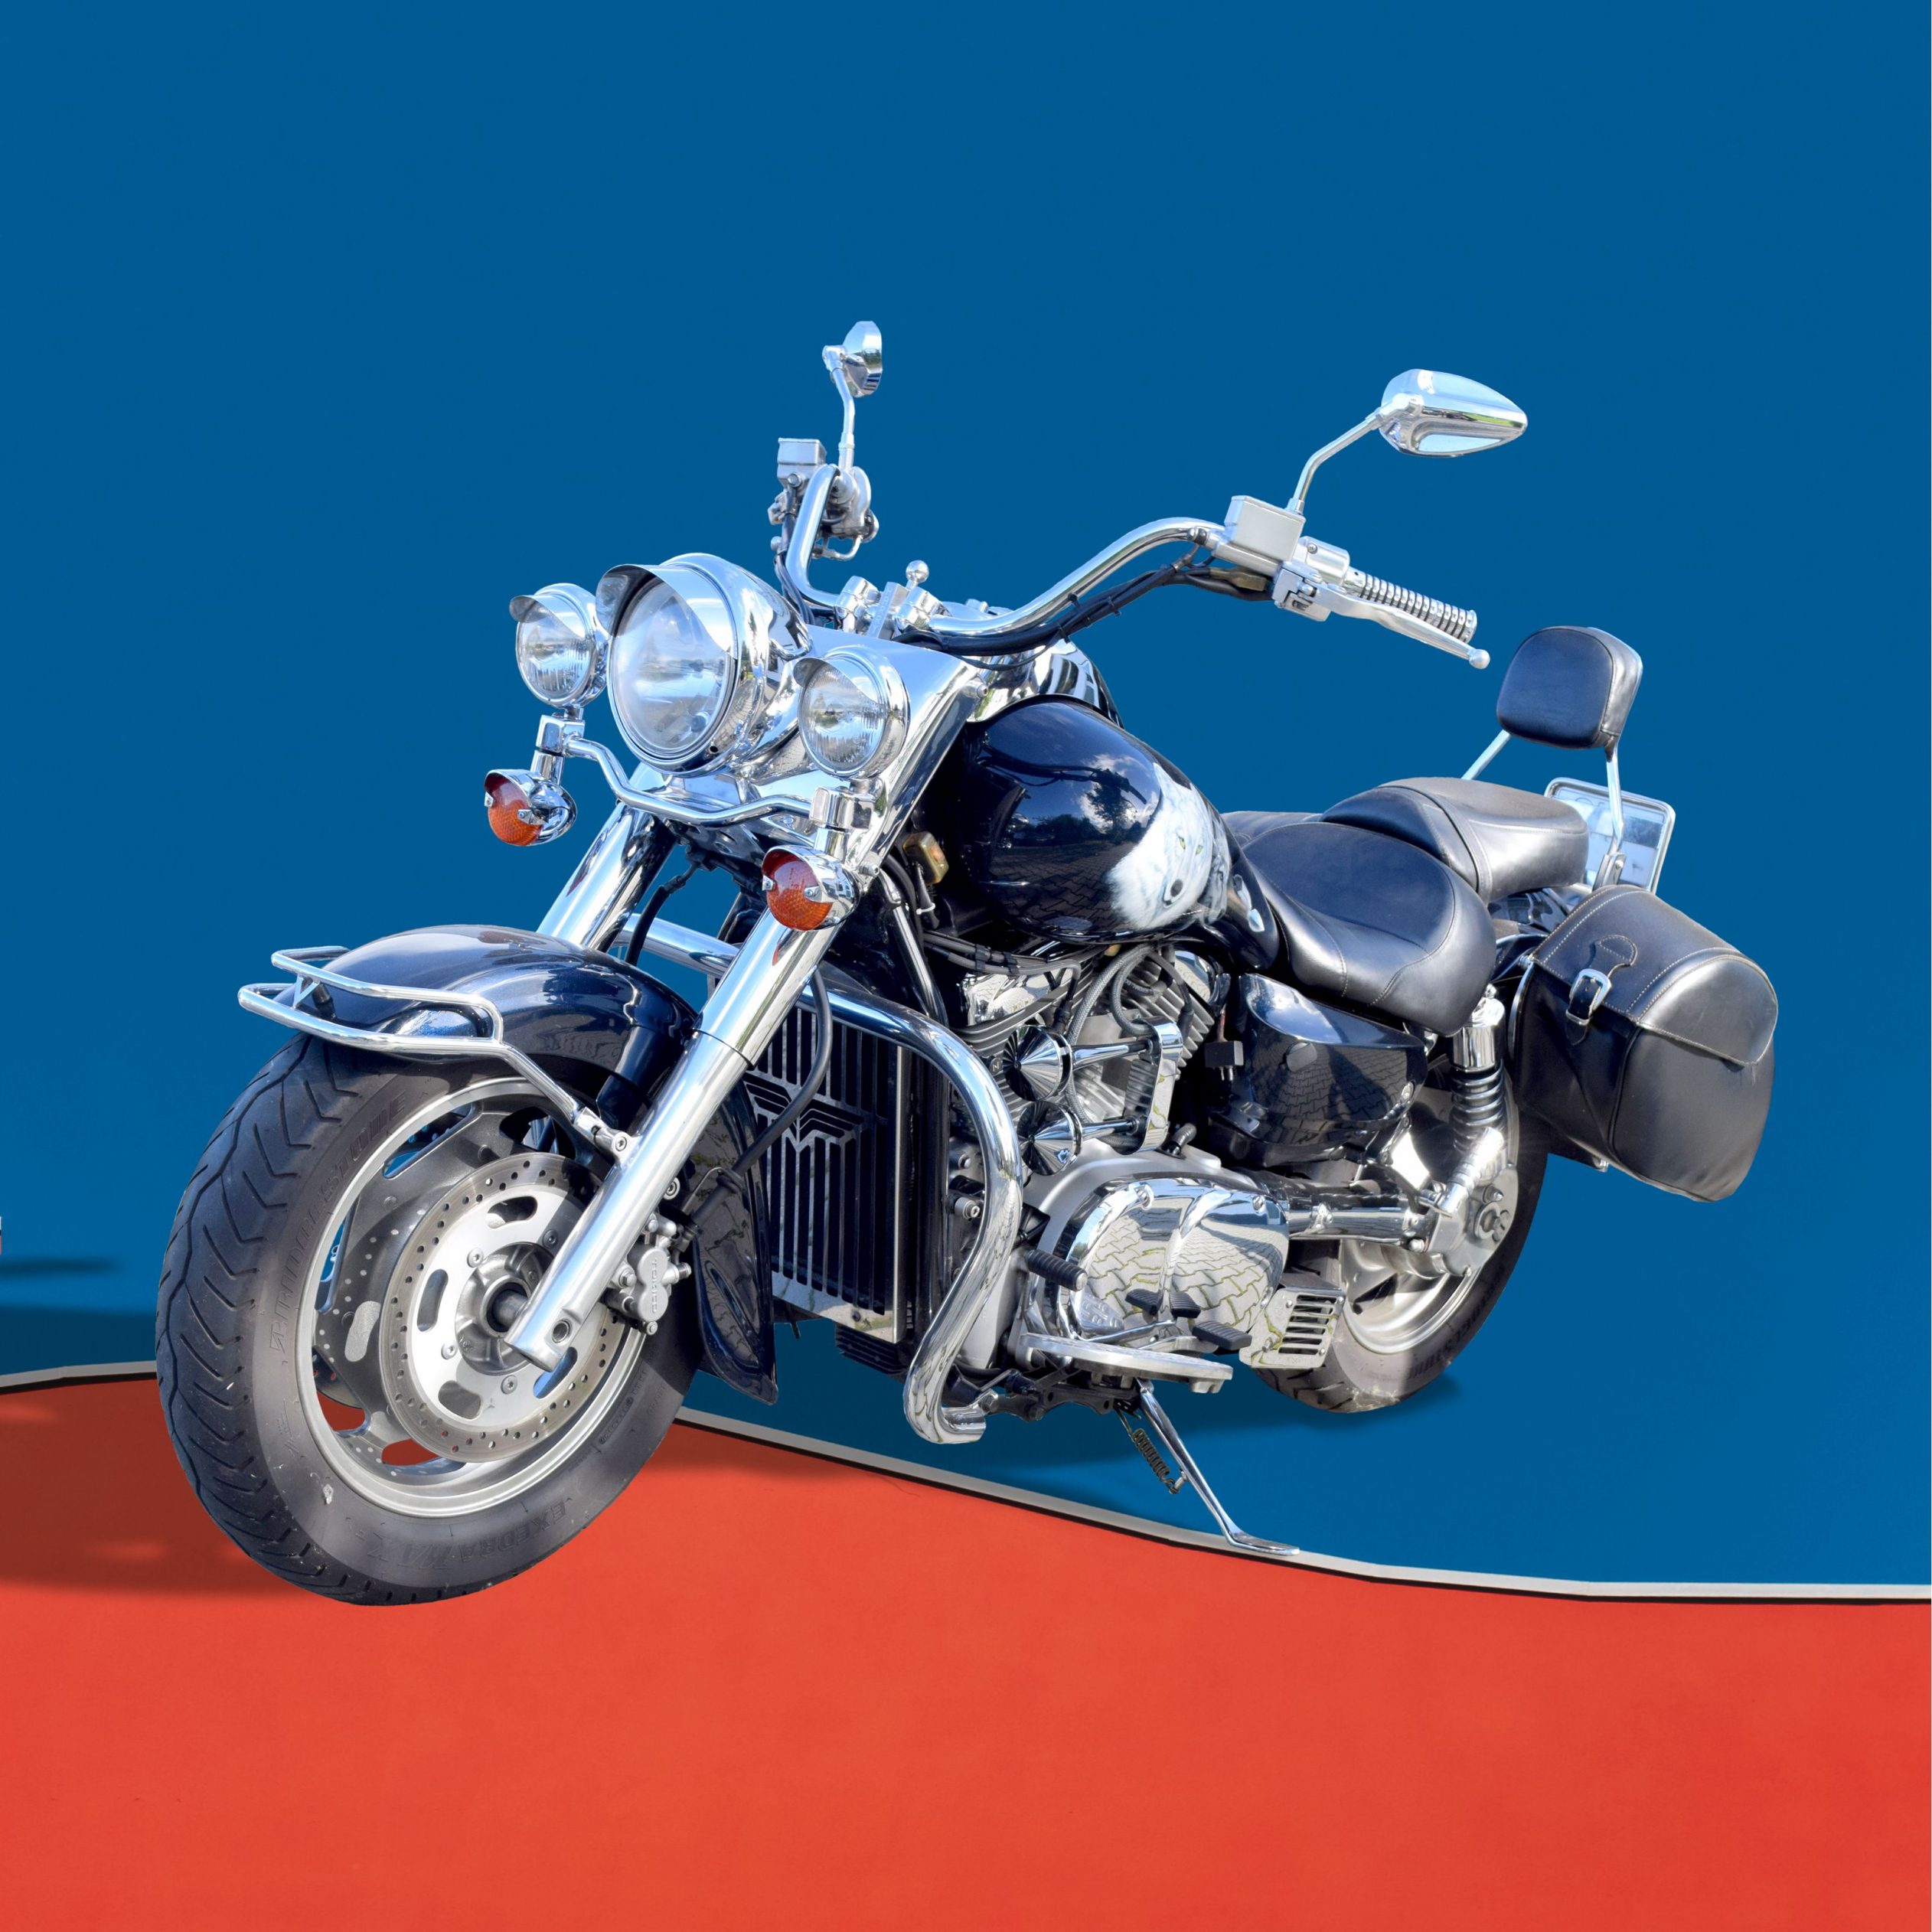 2524x2524 Parallax wallpaper 4k Motorbike Blue Dividing Red Ipad Wallpaper 2524x2524 pixels resolution